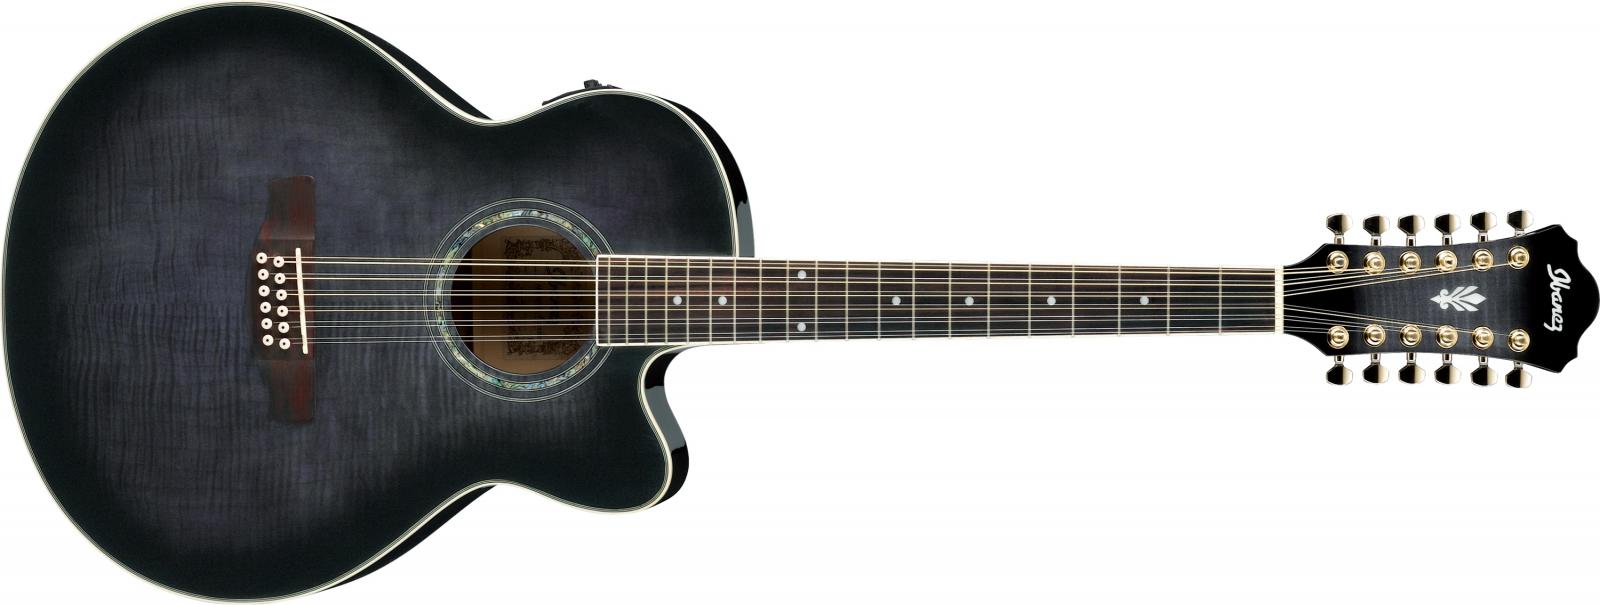 Ibañez - Guitarra Electroacústica AEL de 12 Cuerdas, Color: Negro Mod.AEL2012E-TKS_24